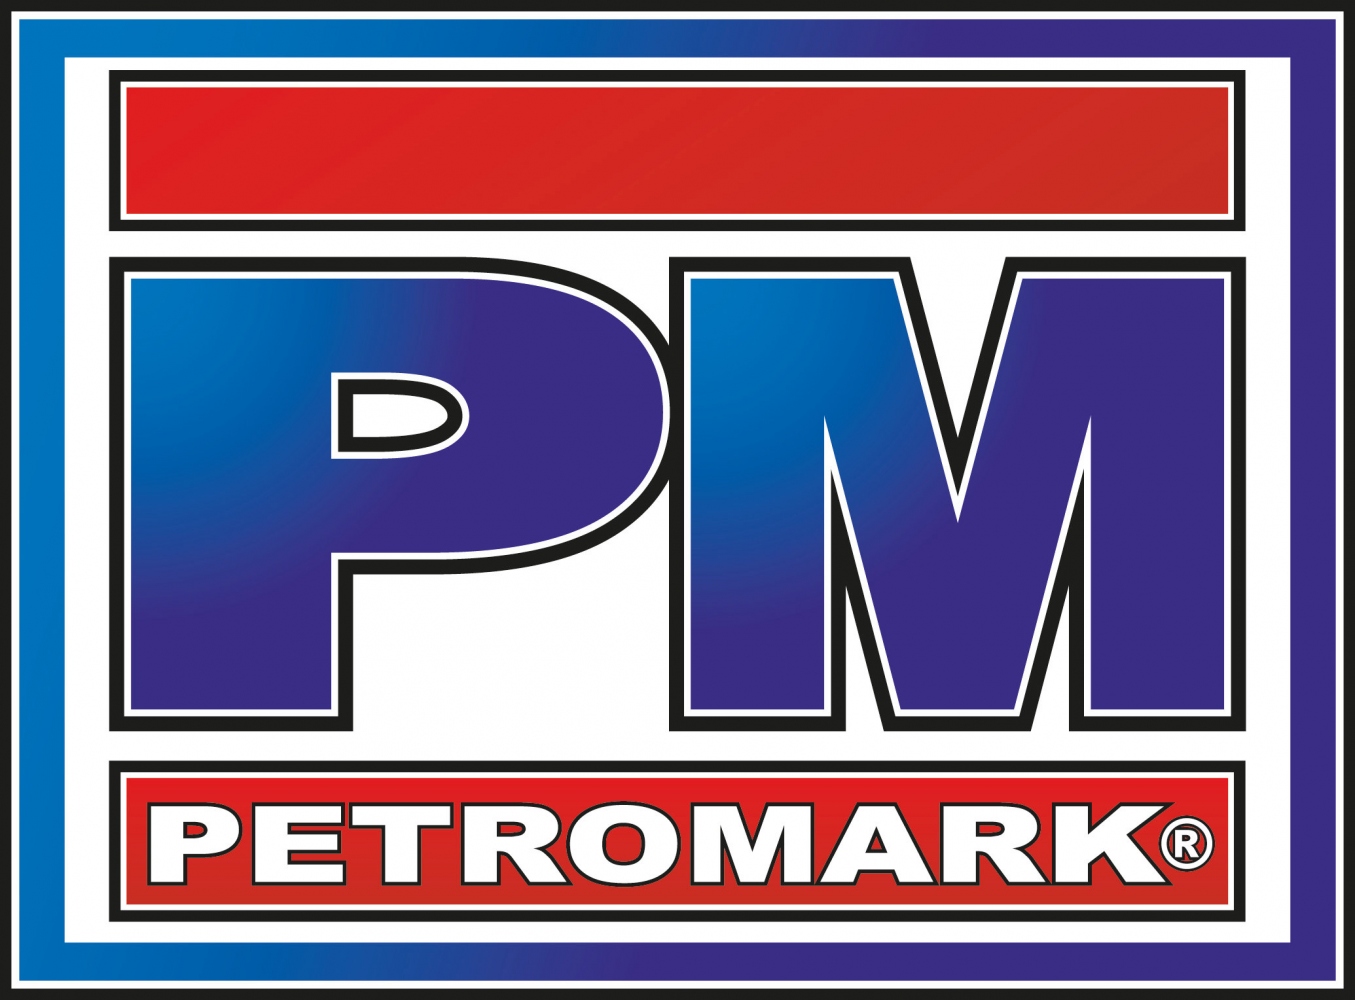 pics/Petromark/petromark-kleurverloop-logo2.jpg